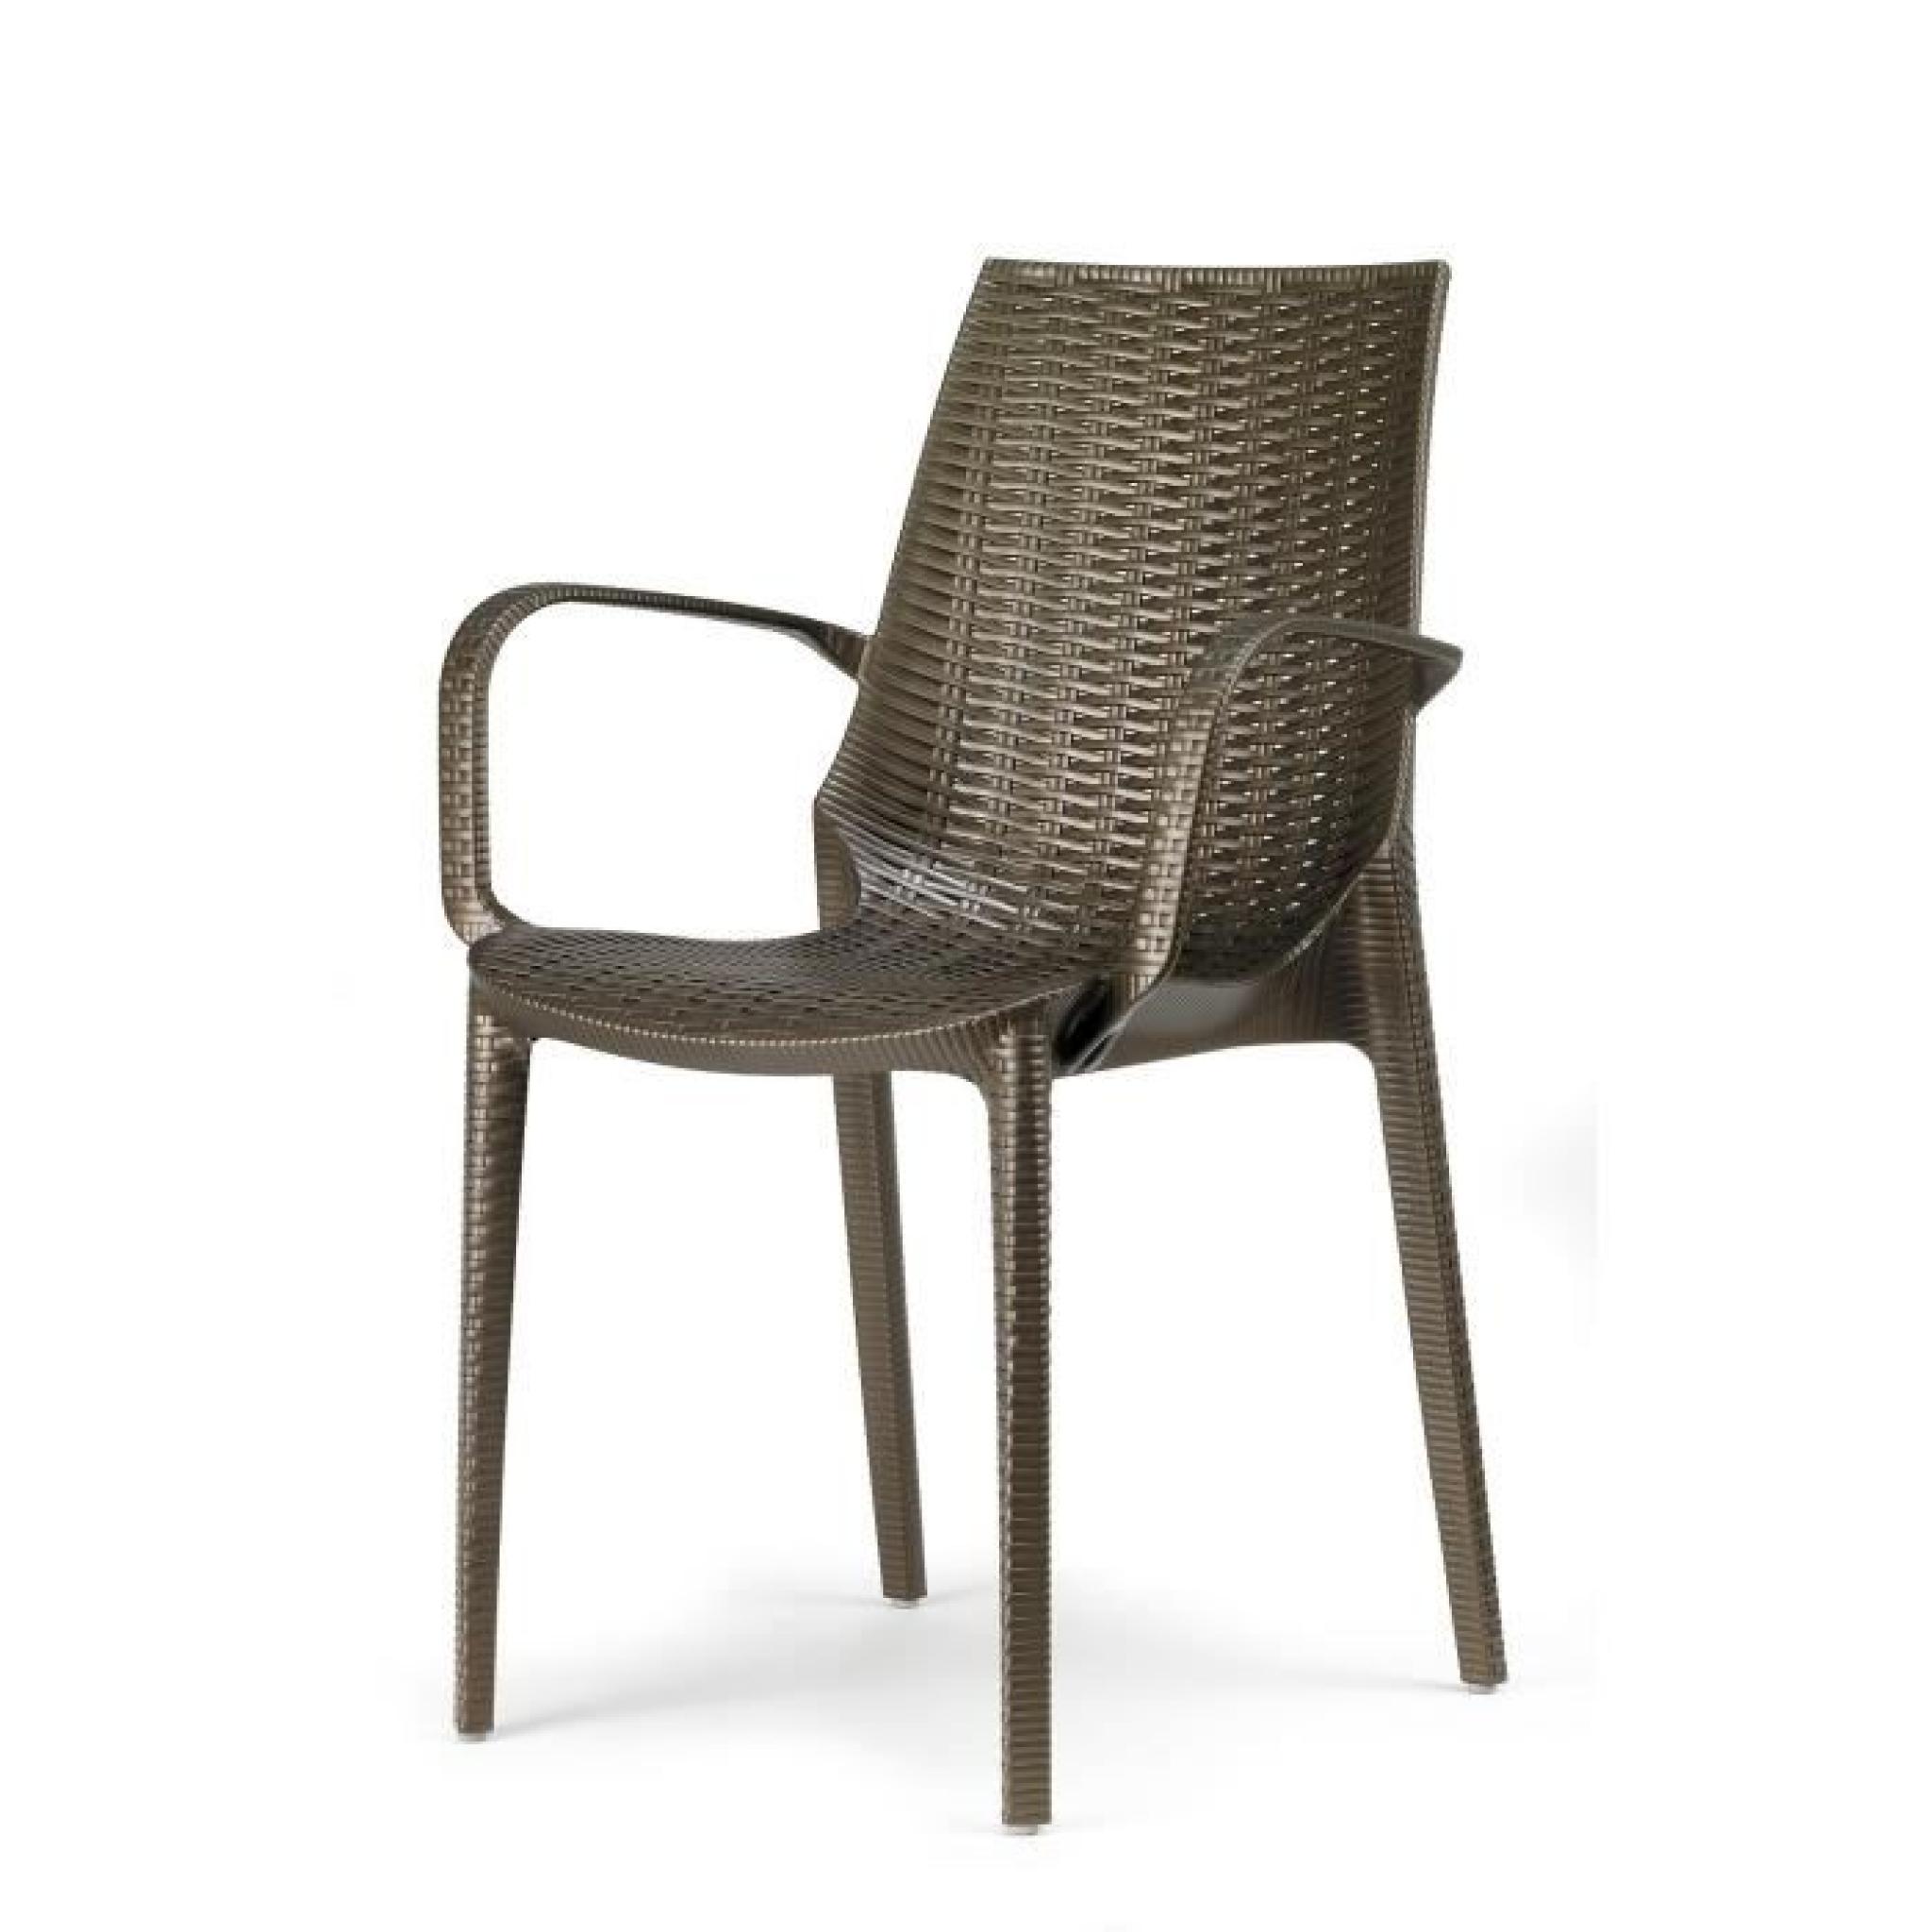 Chaise tissee bronze design - LUCREZIA avec accoudoirs bronze - deco